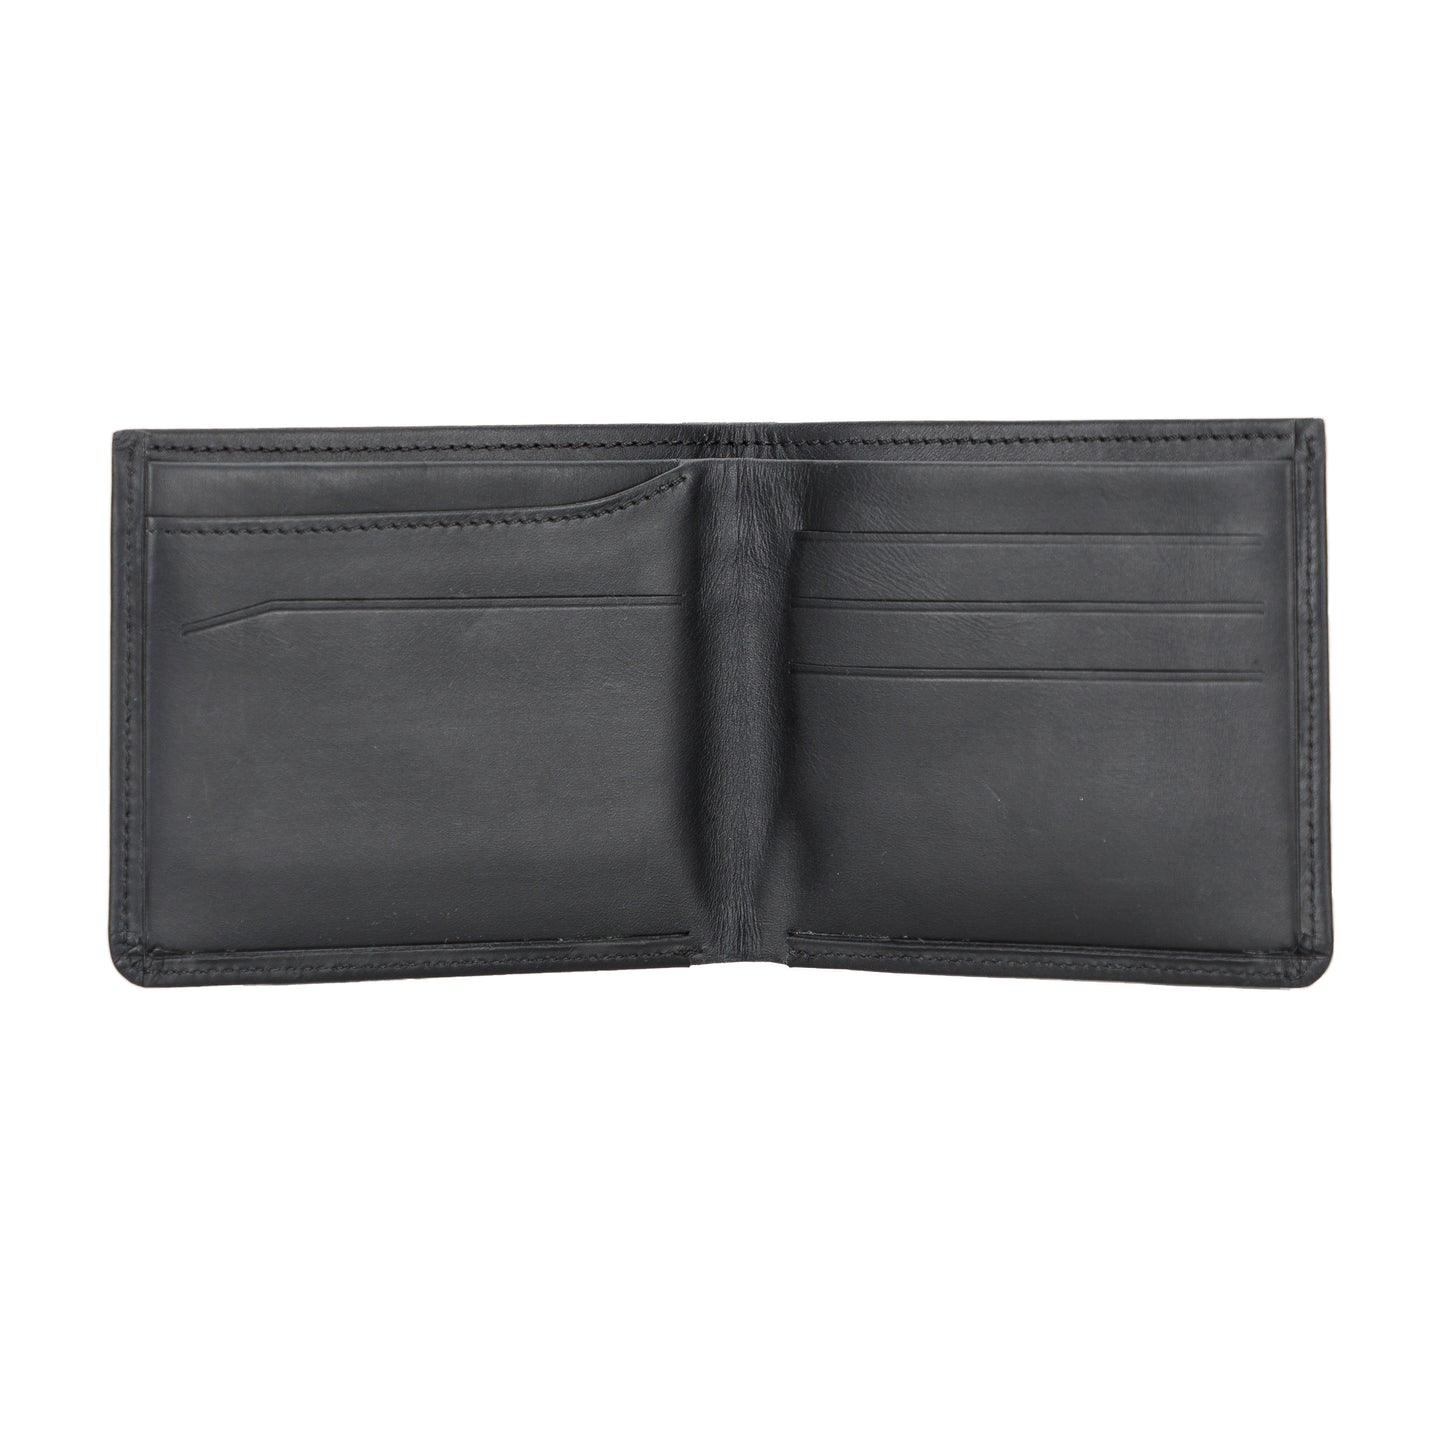 UST Leather Men Wallet - Rustic Black